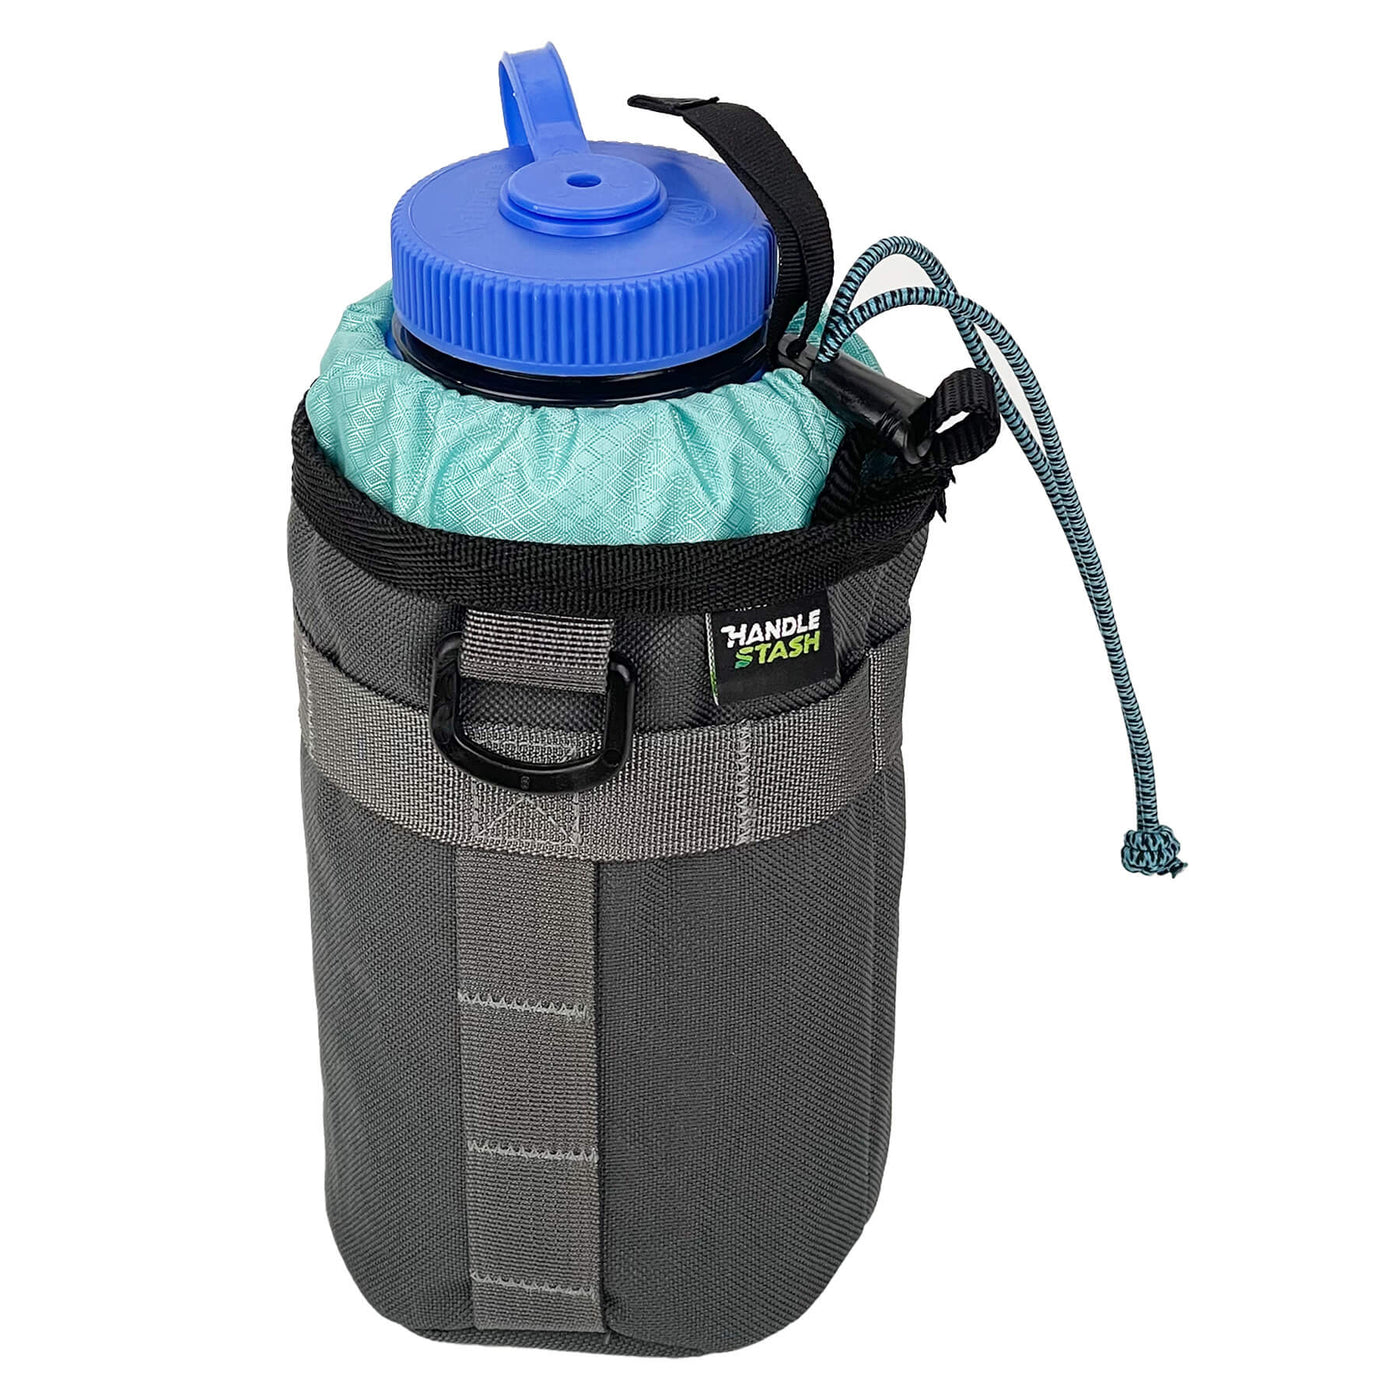 Charcoal stem bag with light blue liner holding a water bottle. 